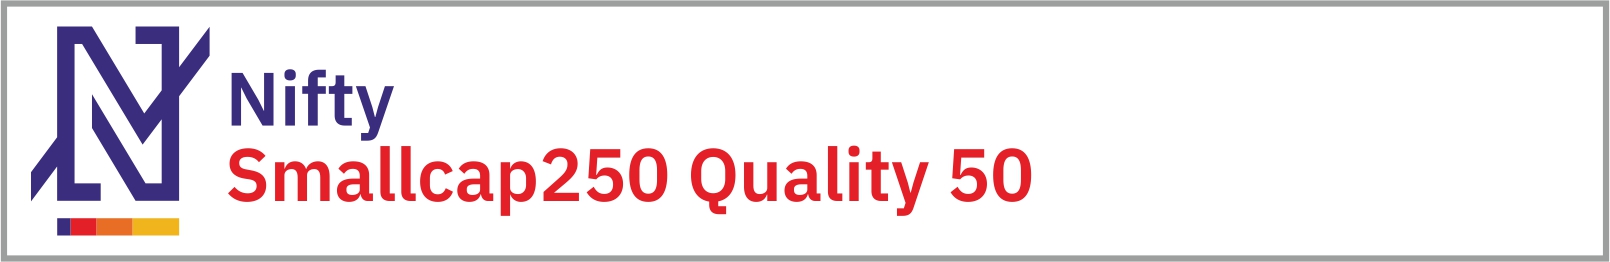 Nifty Smallcap250 Quality 50 logo